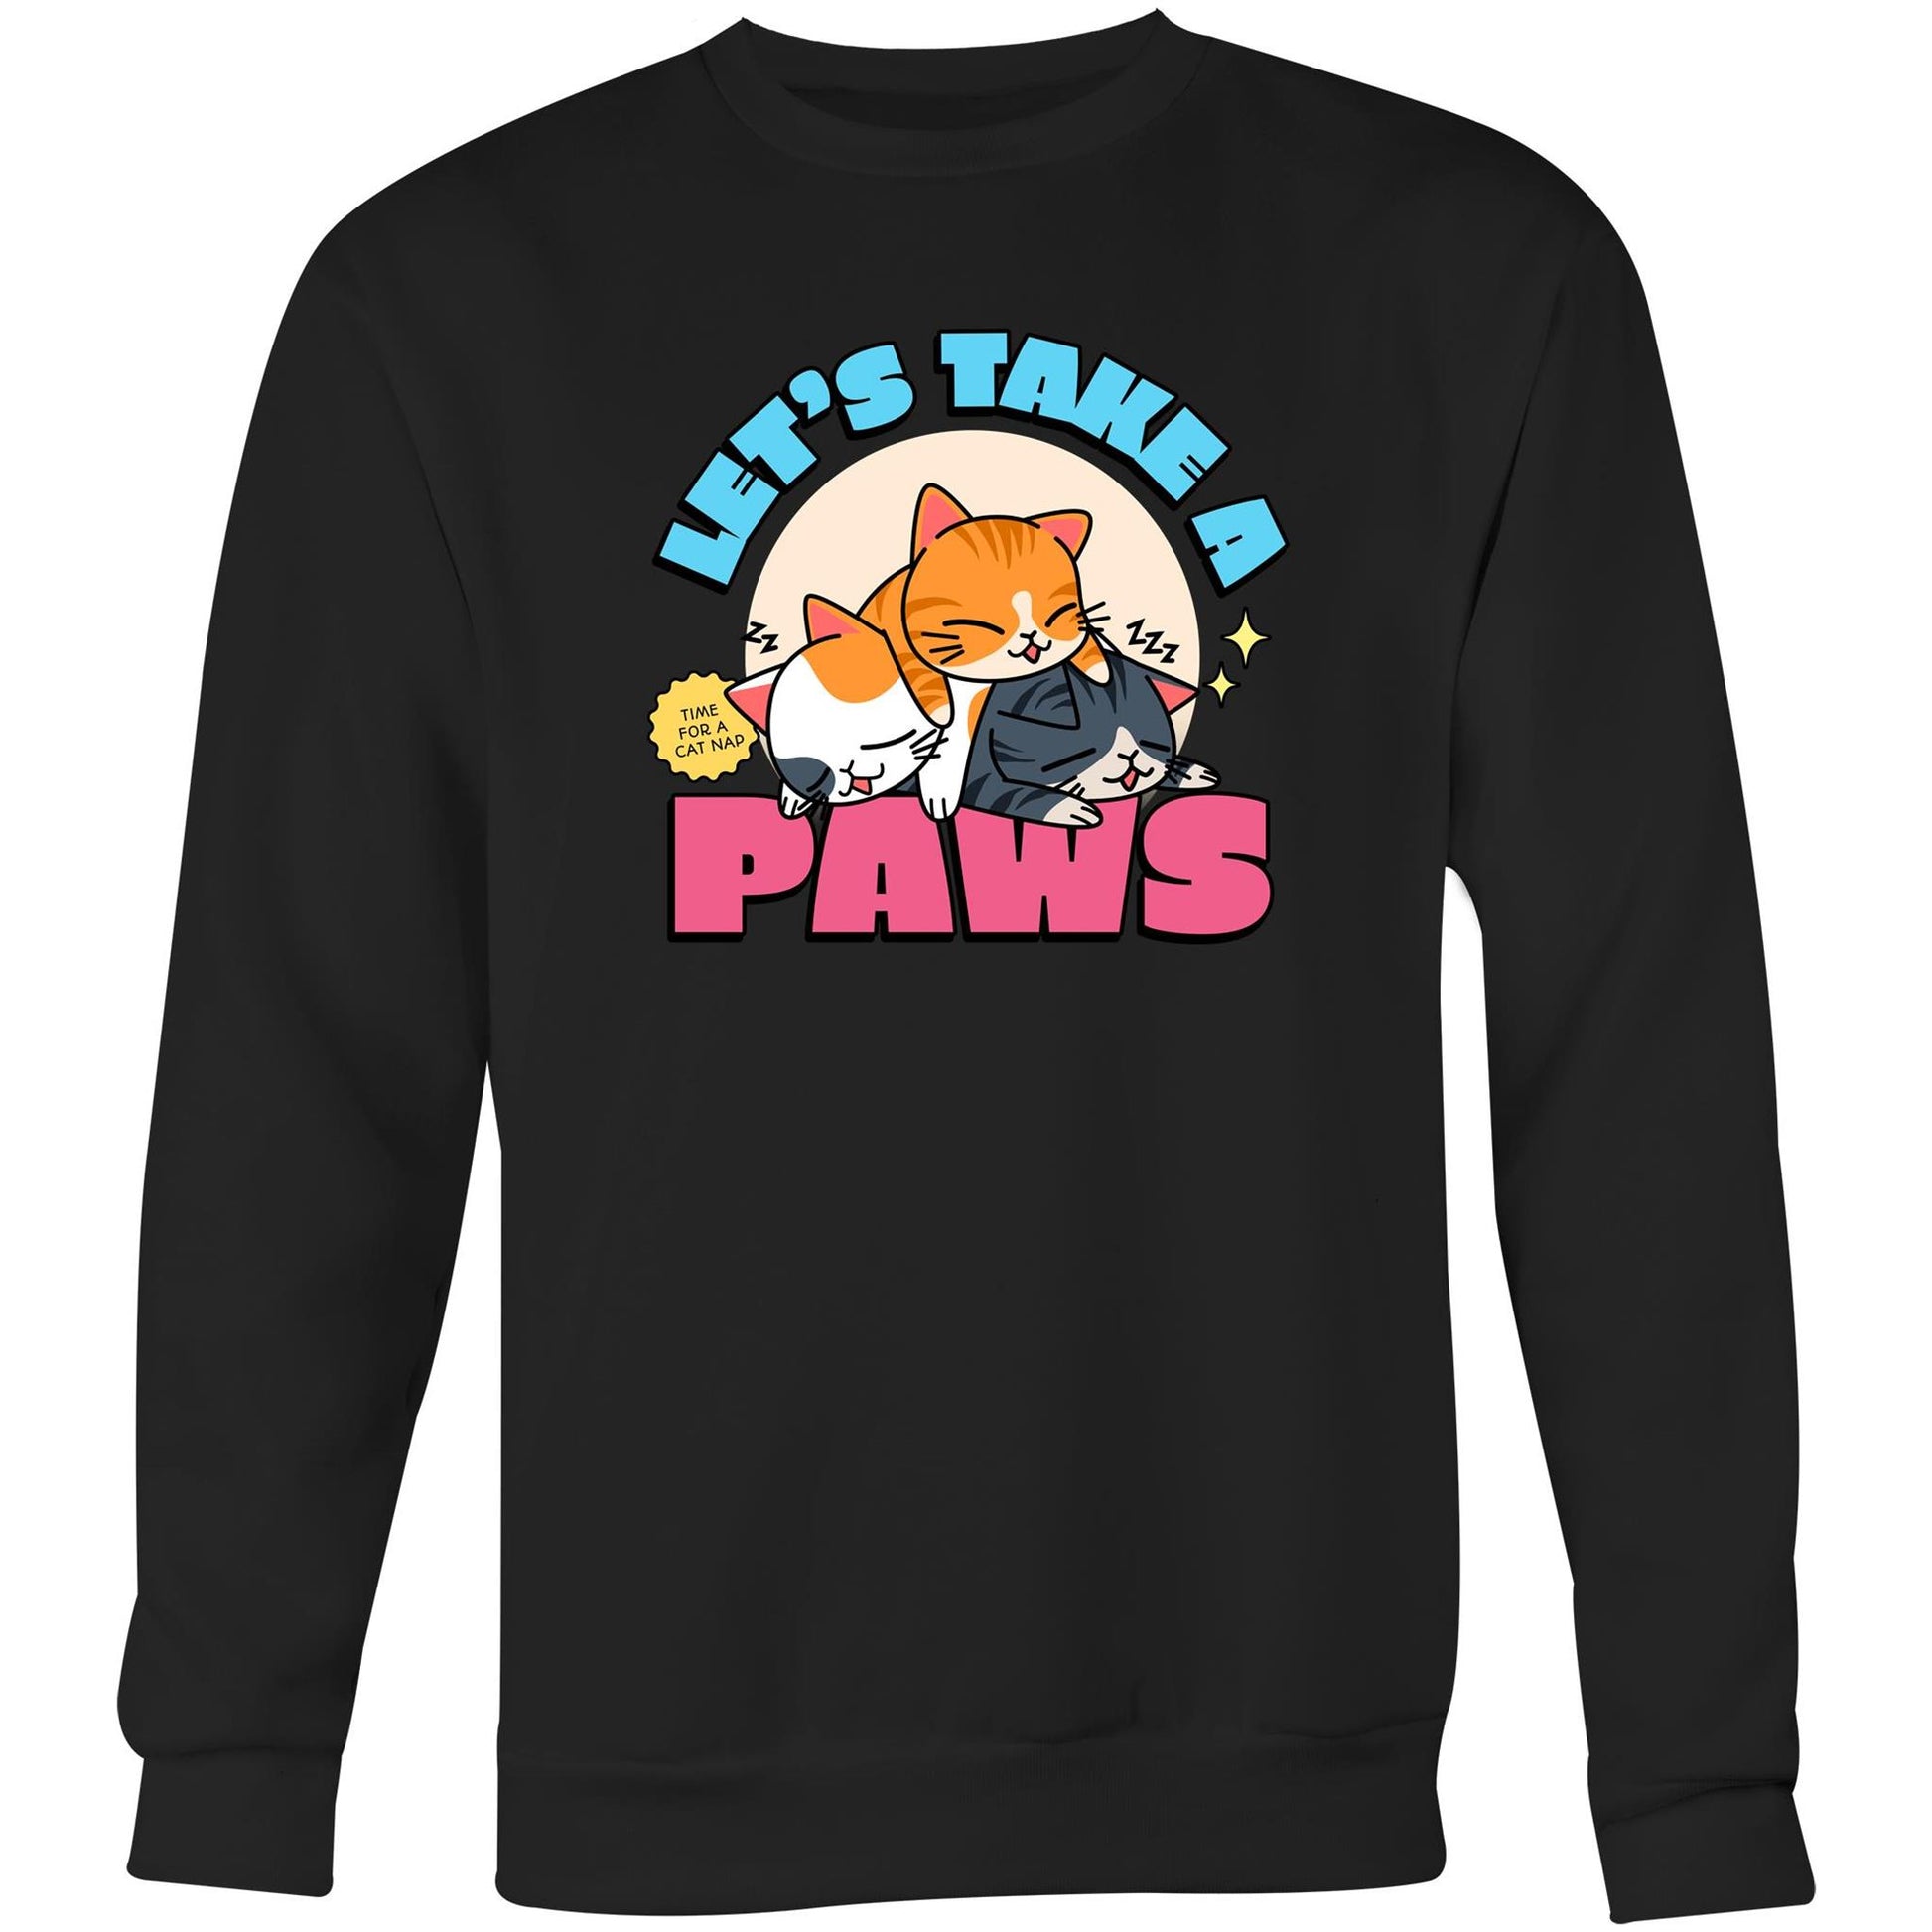 Let's Take A Paws, Time For A Cat Nap - Crew Sweatshirt Black Sweatshirt animal